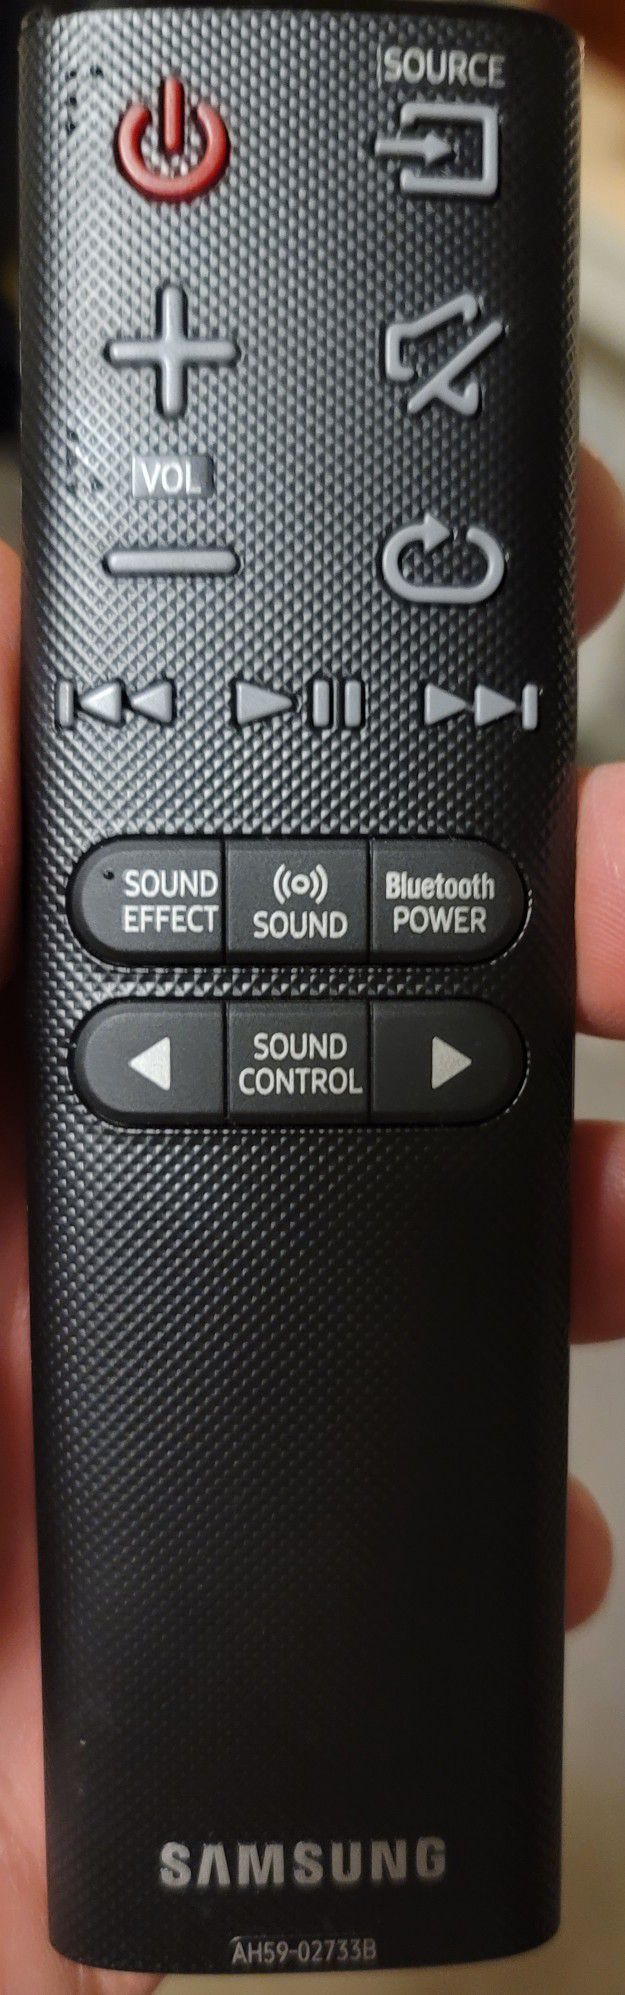 Samsung Soundbar with Wireless subwoofer and Bluetooth. 